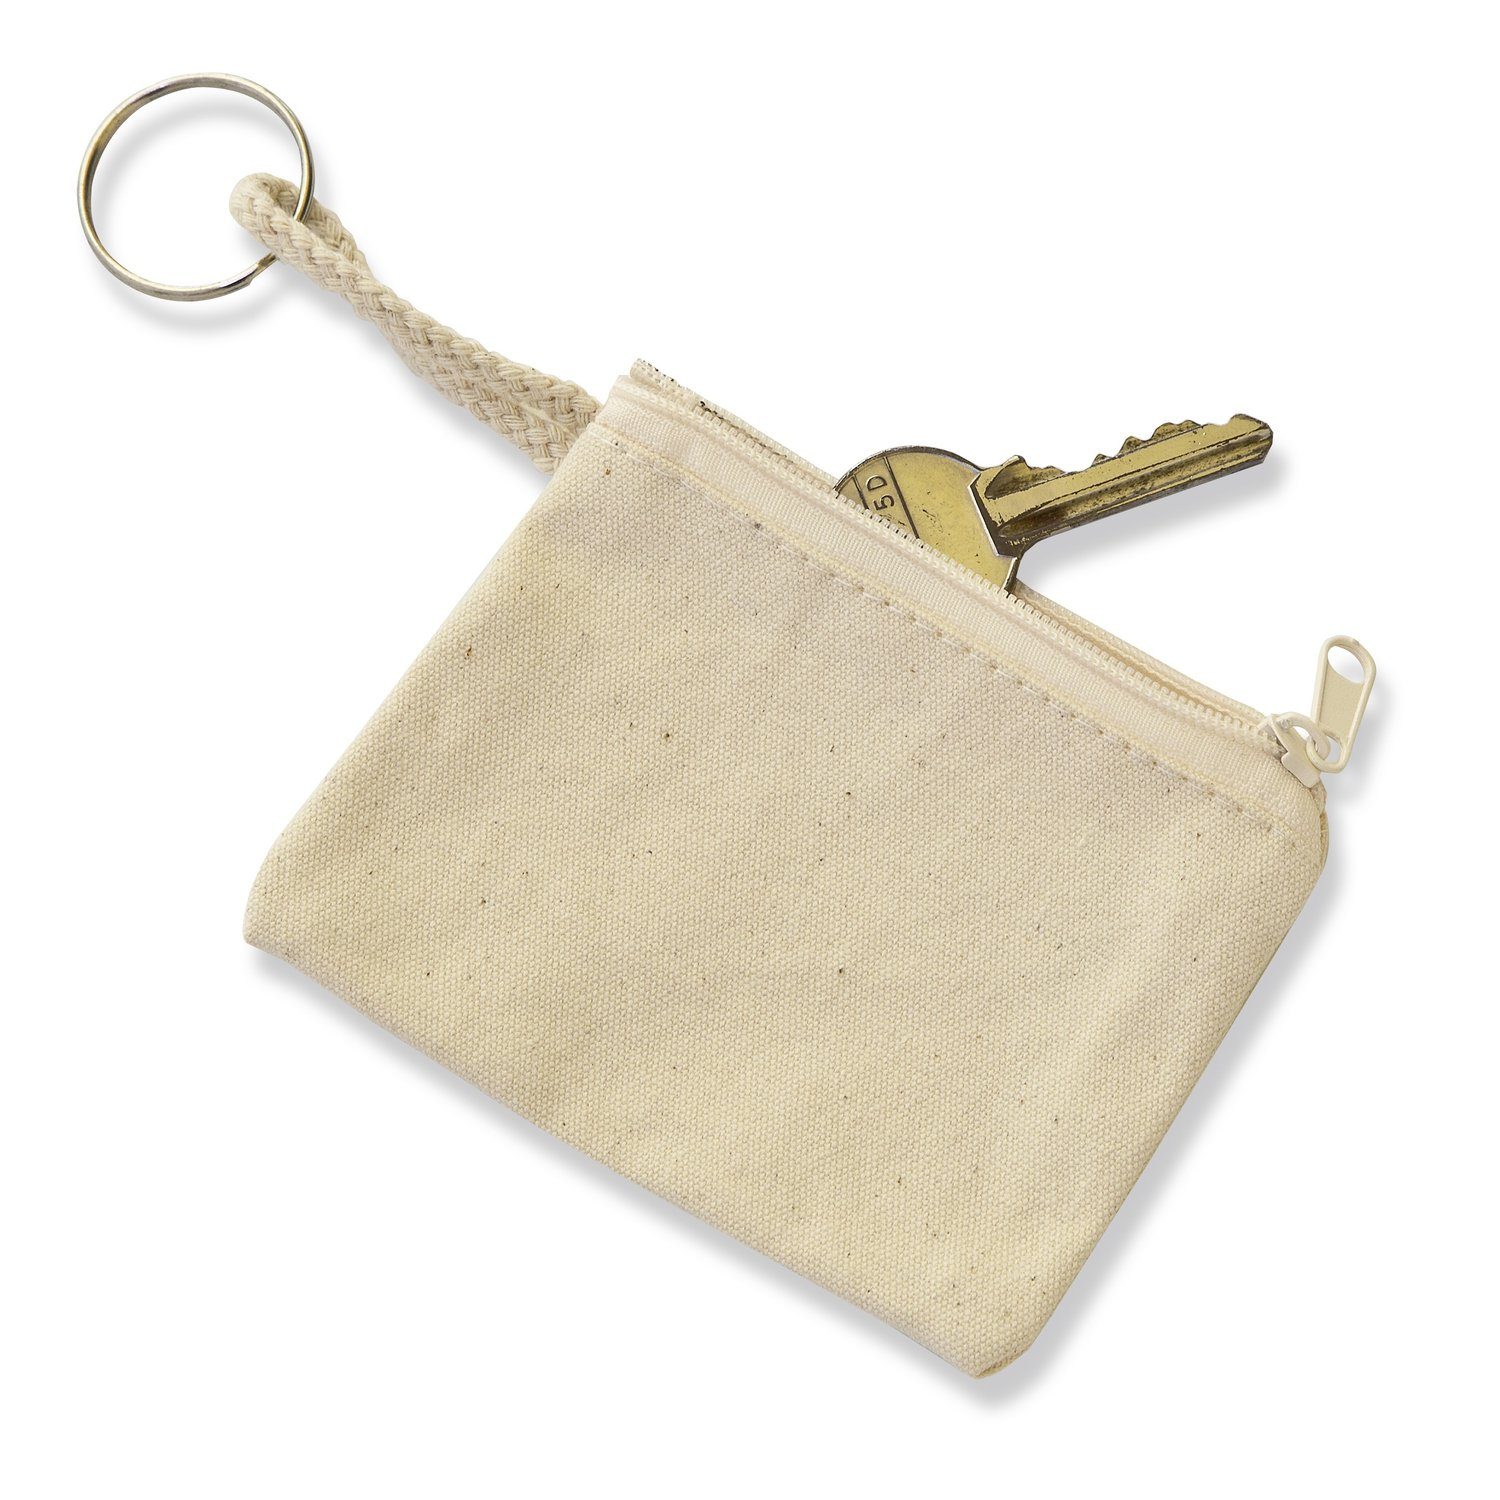 EDUPLAY Experimentierkasten Schlüsseletui, Baumwolle, 10 x 8 x 0,3 cm, unbemalt, blanko